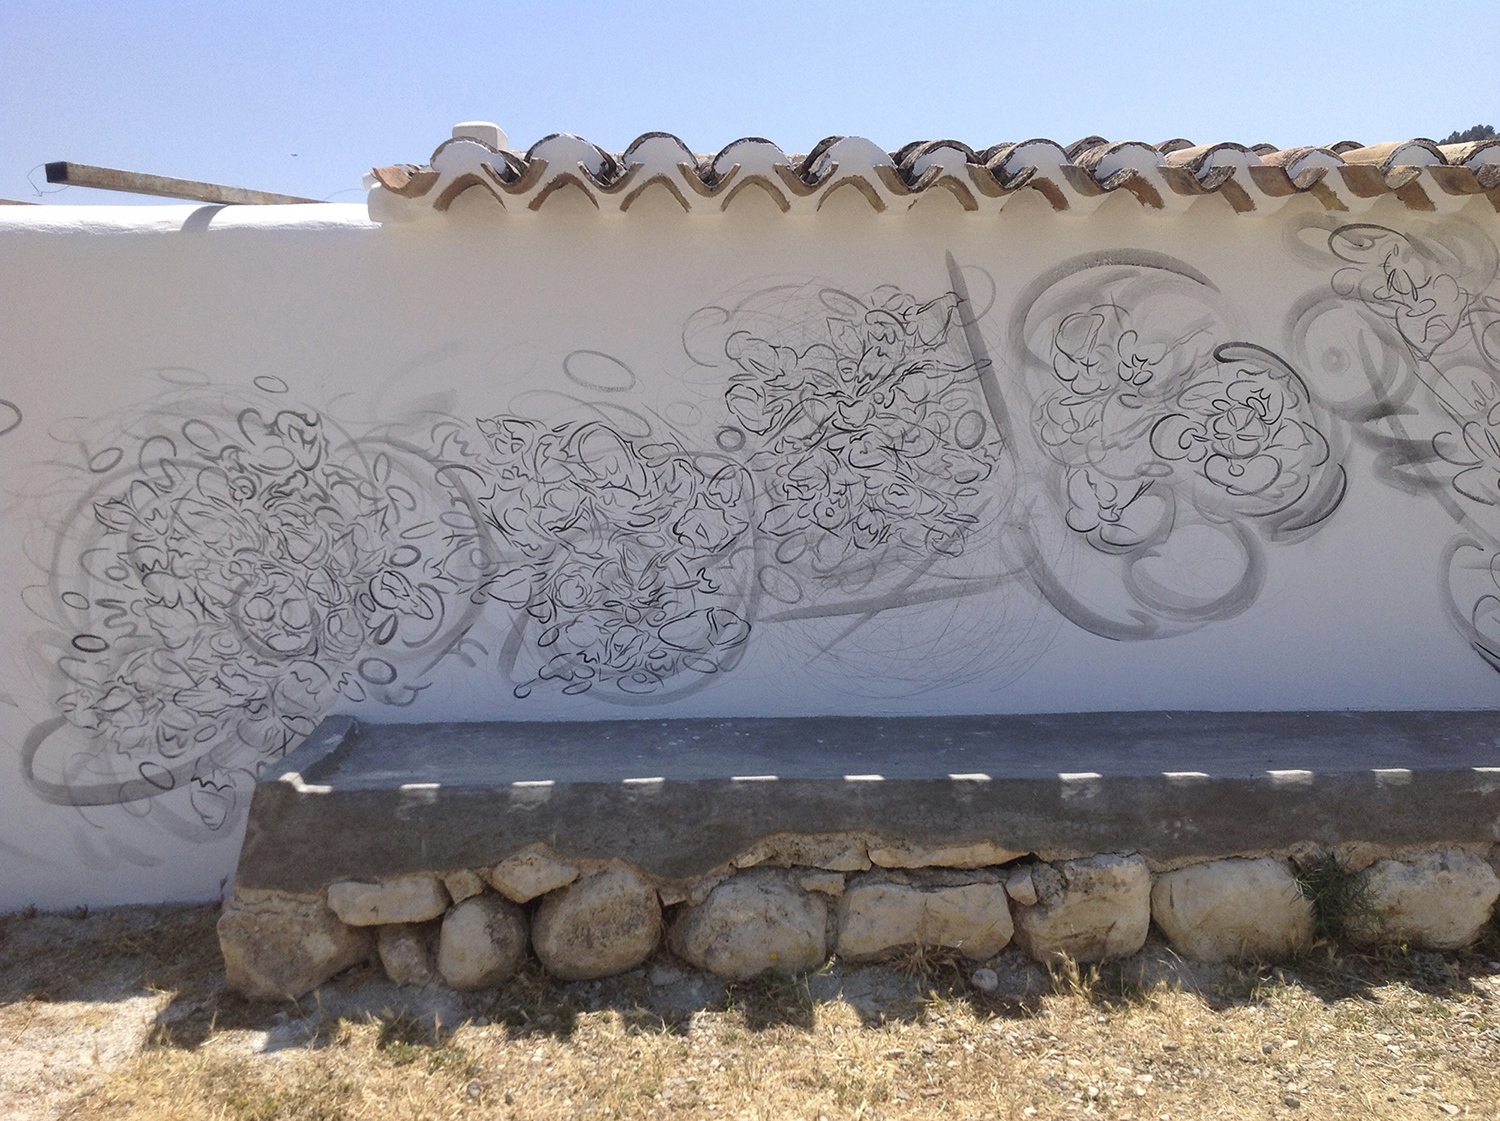    SUNBURST,  2013, acrylic on wall.&nbsp;   Joya: arte + ecología,&nbsp; Cortijada Los Gázquez, Vélez Blanco (Almería), Spain  